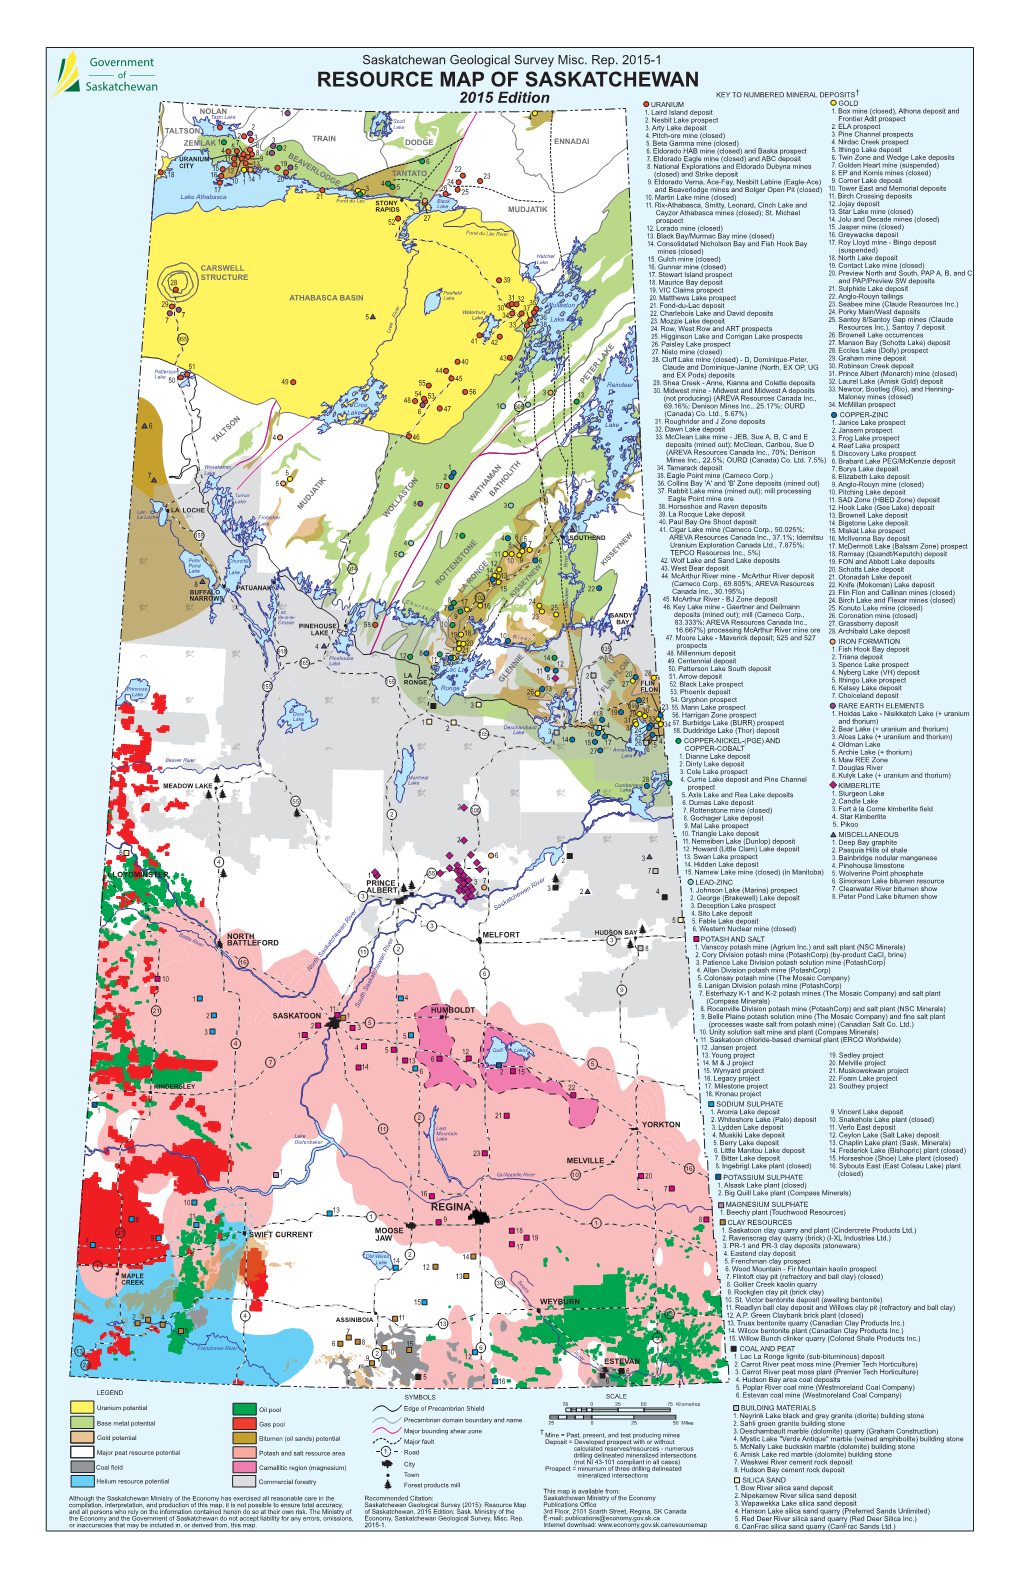 Resource Map of Saskatchewan 2015